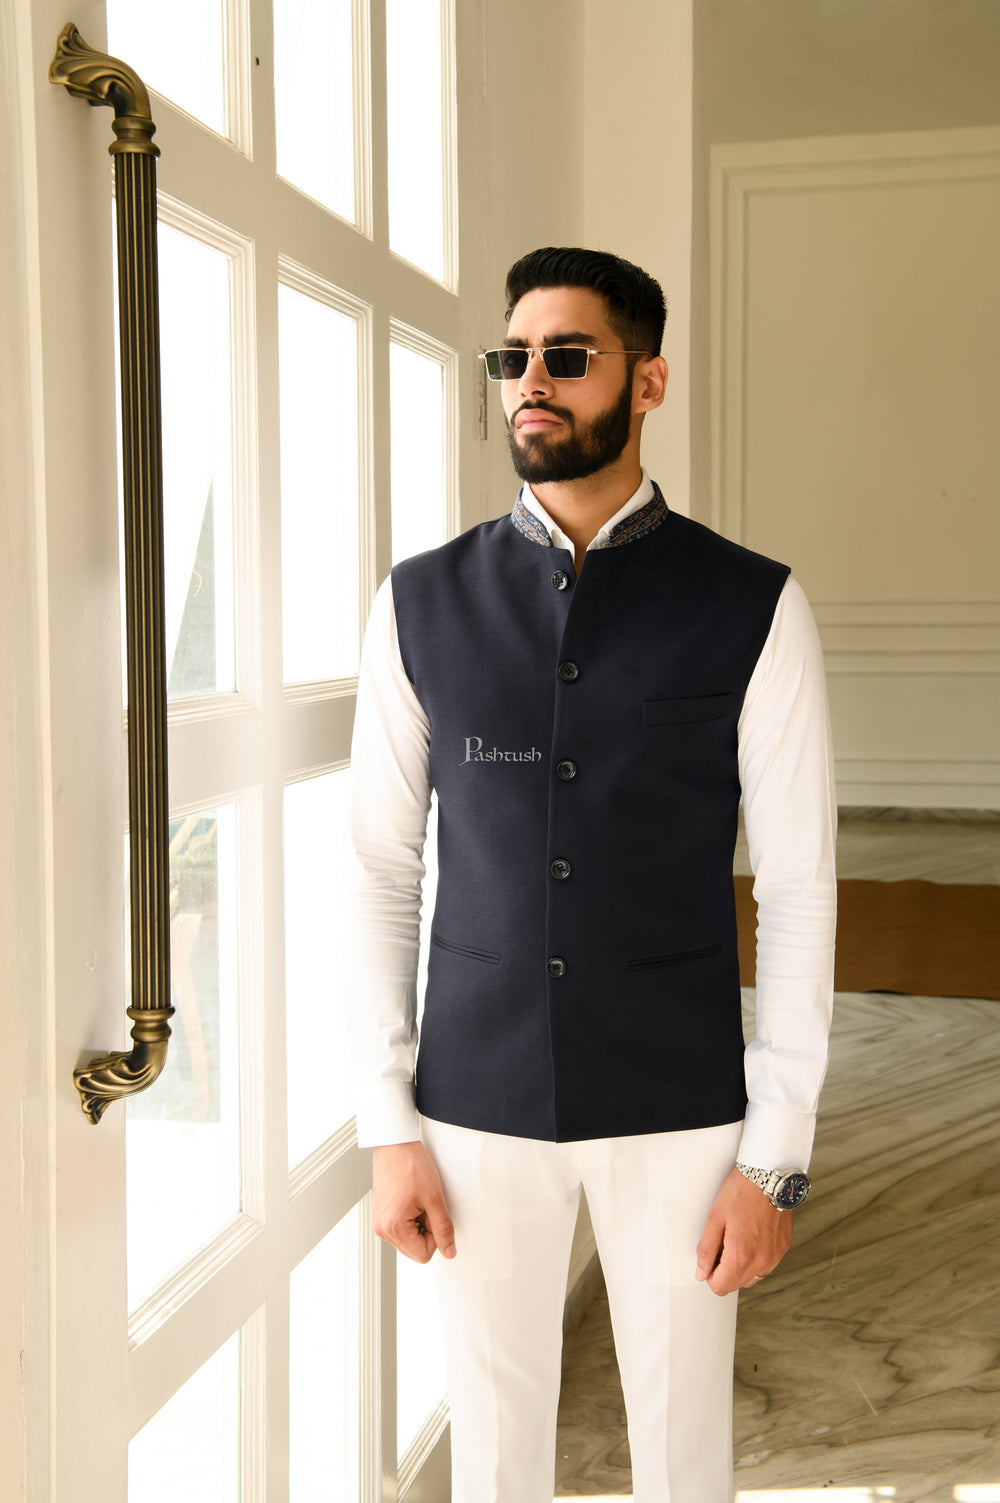 Pashtush India Coats & Jackets Pashtush Mens Waistcoat, Fine Wool, With Collar Detailing, Rich Navy Blue